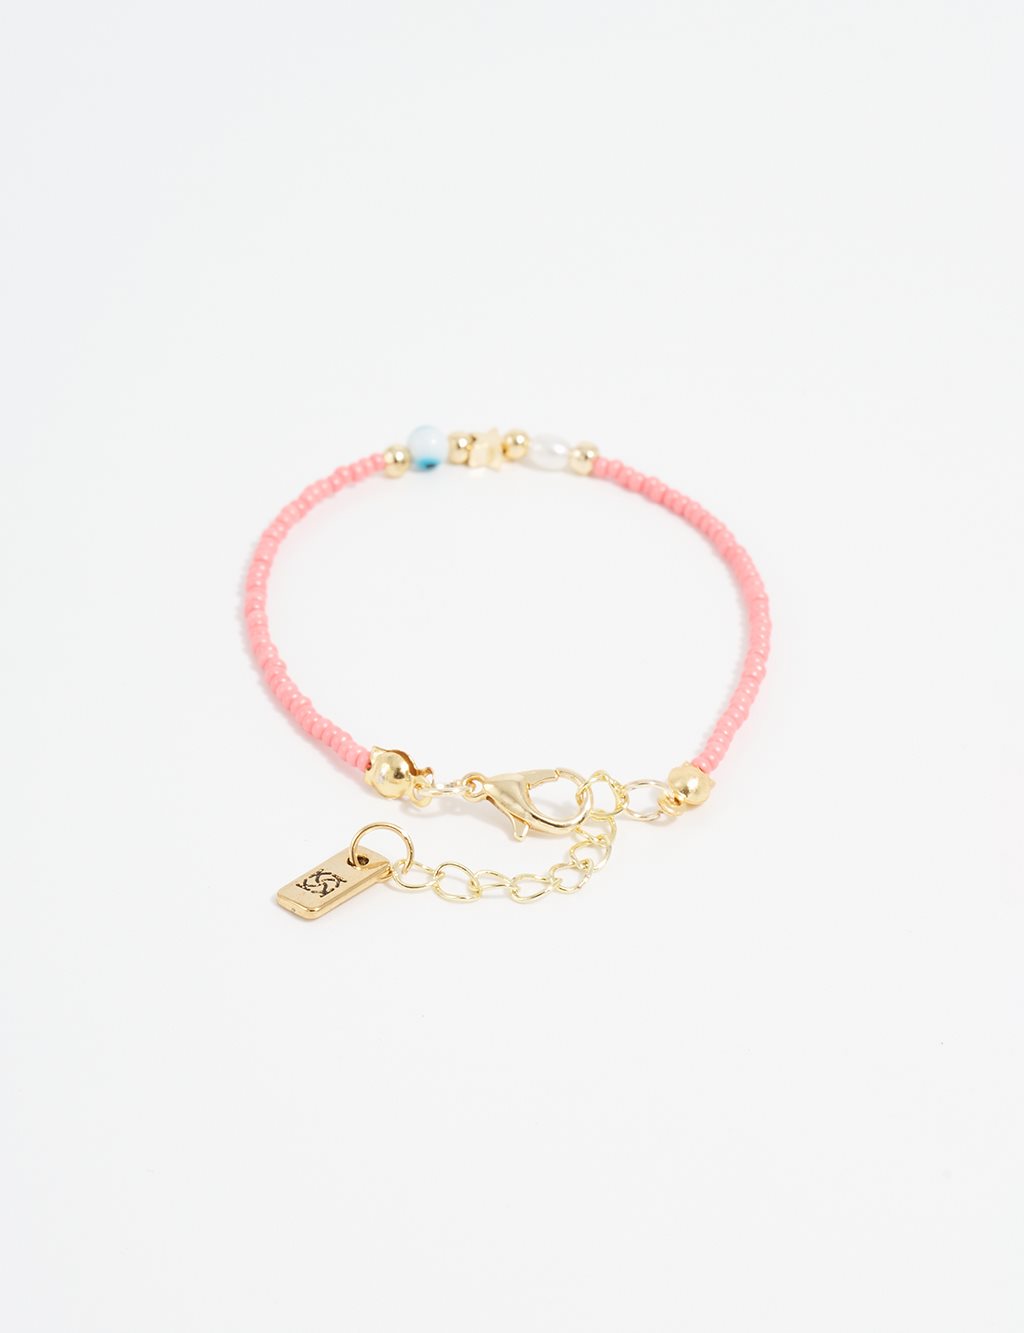 Star Figured Beaded Bracelet Pink